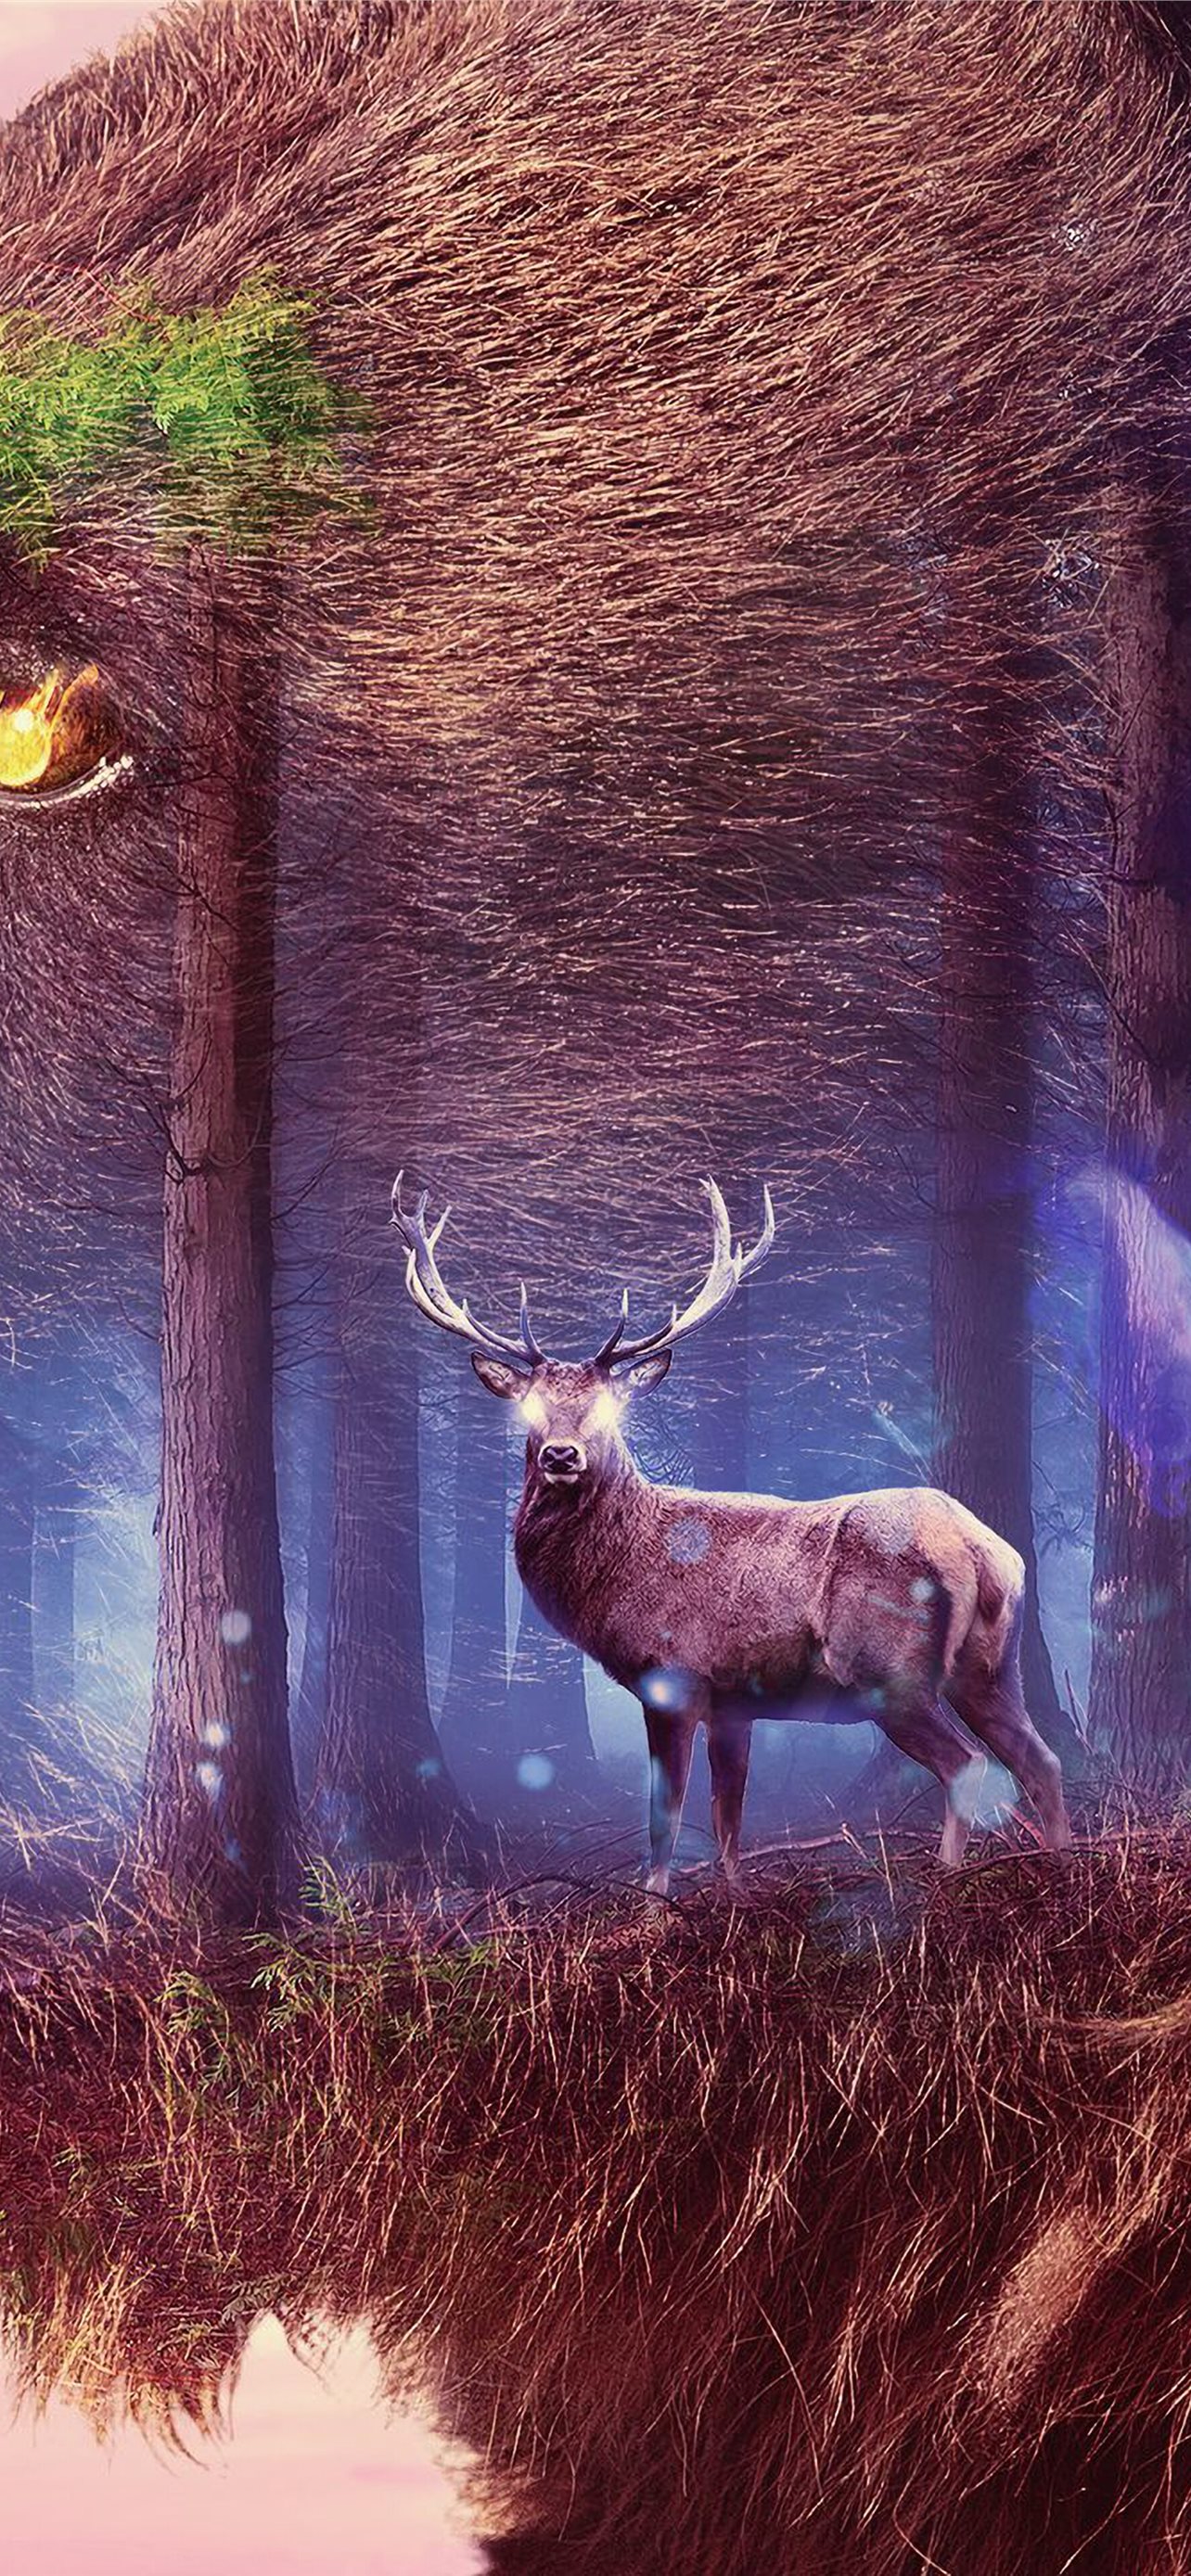 Download wallpaper 1350x2400 deer art vector mountains landscape iphone  876s6 for parallax hd background